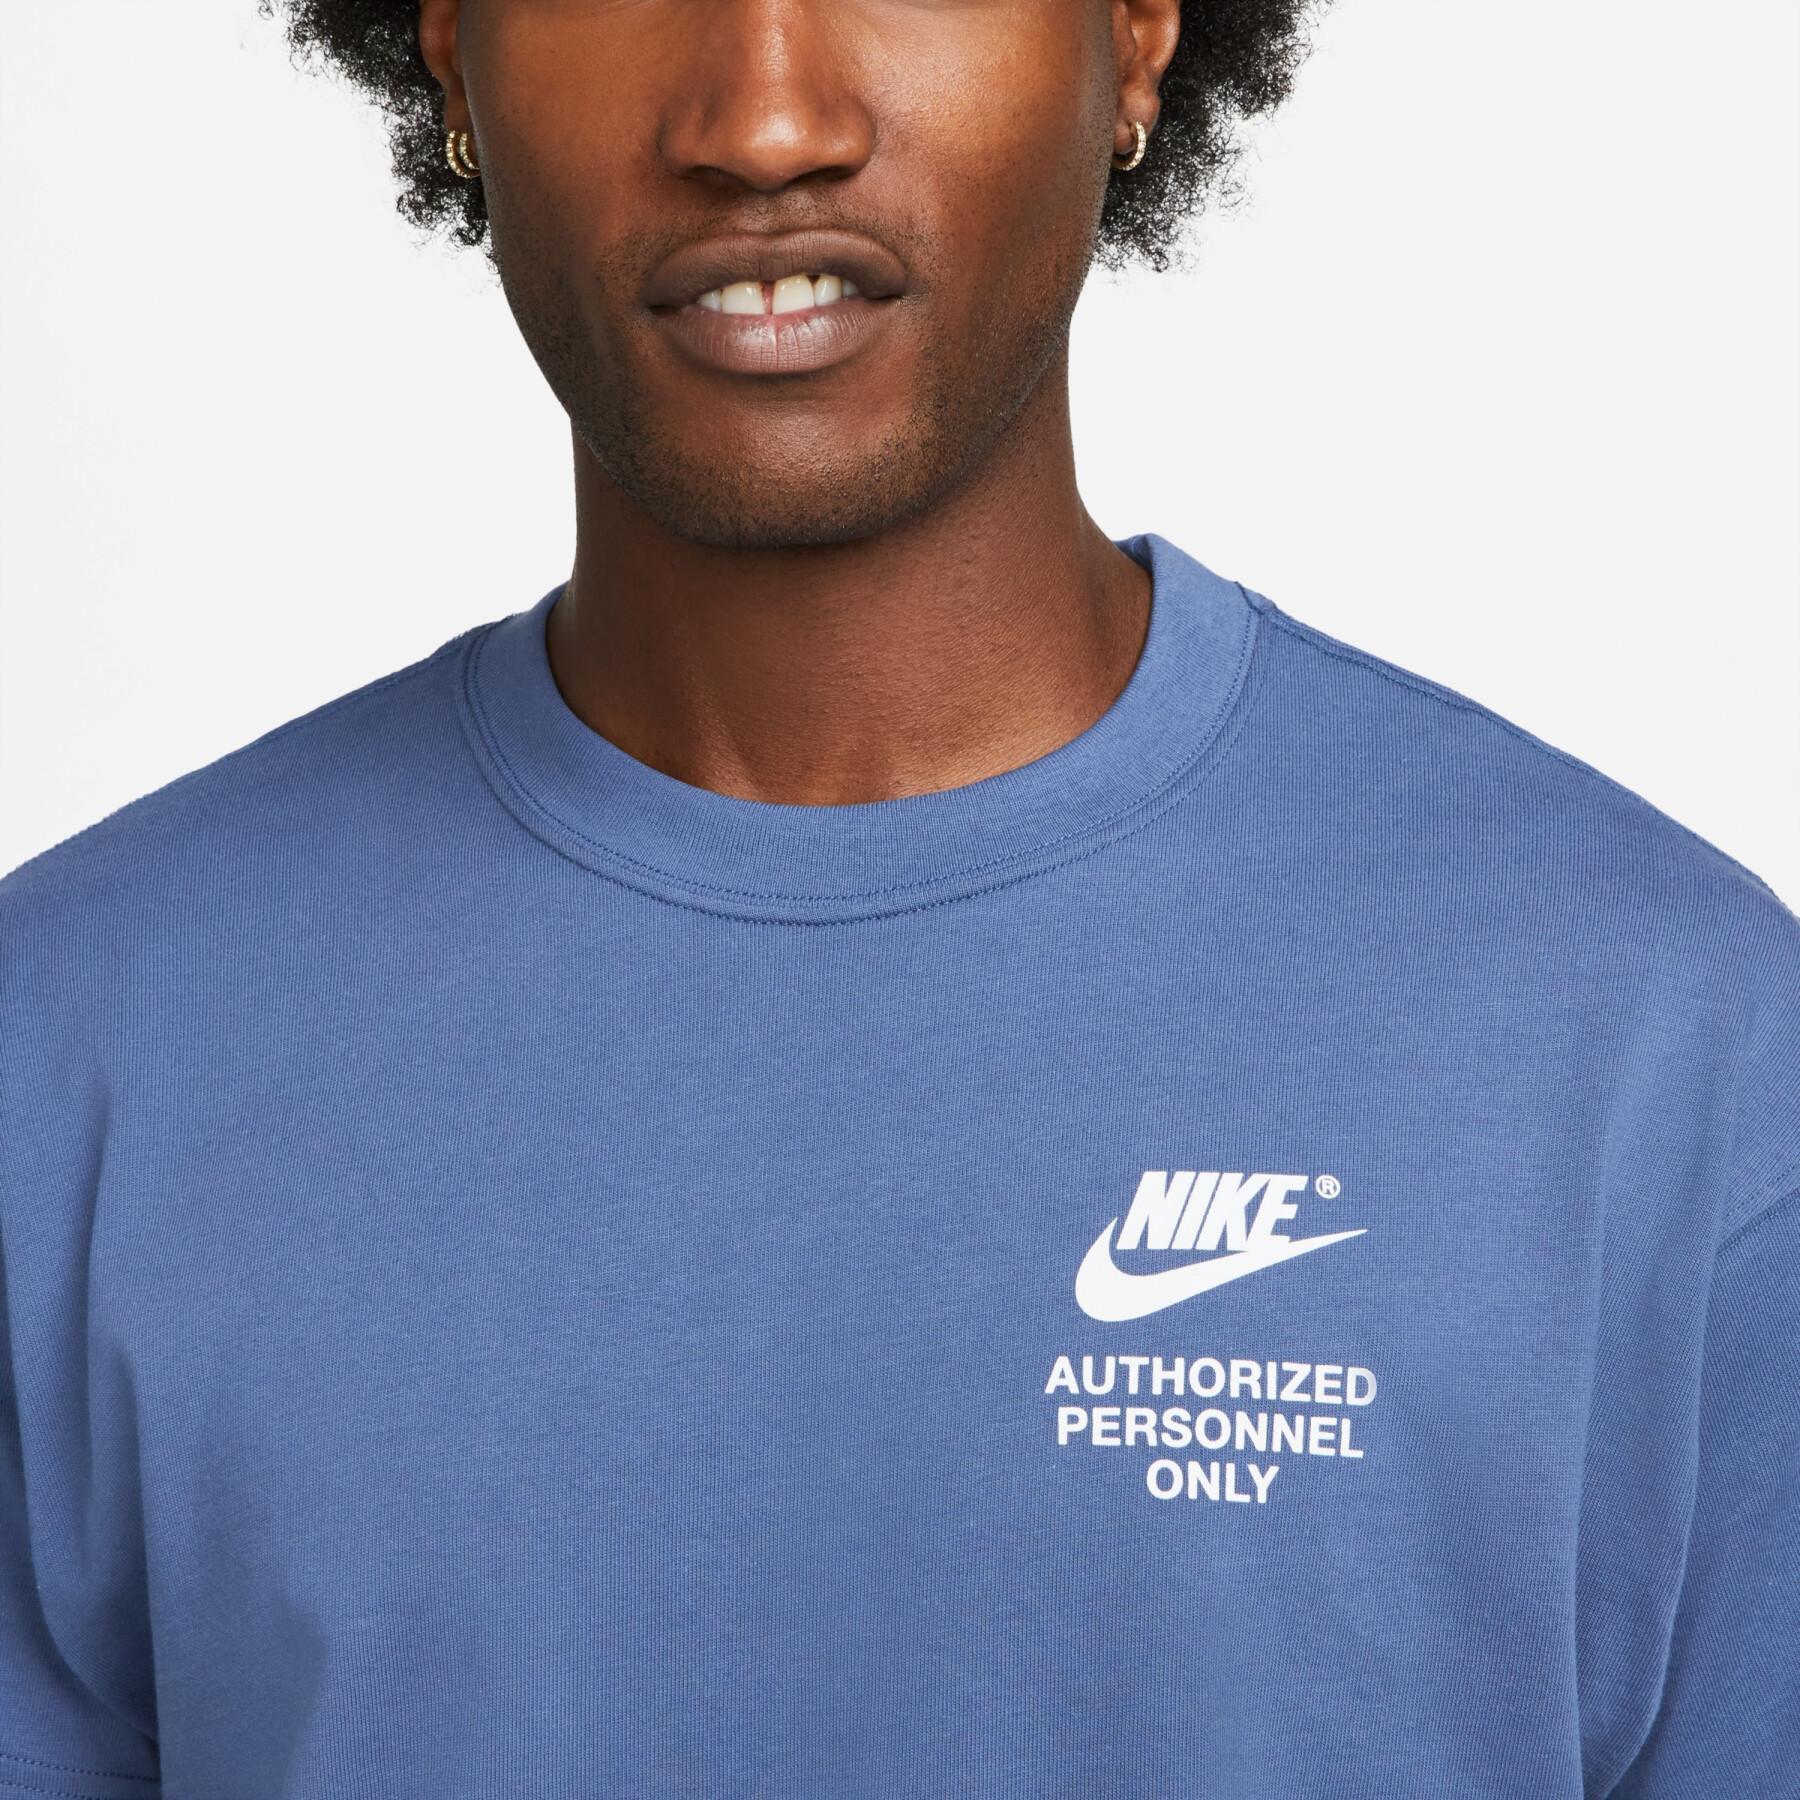 Maglietta Nike Authorized Personnel